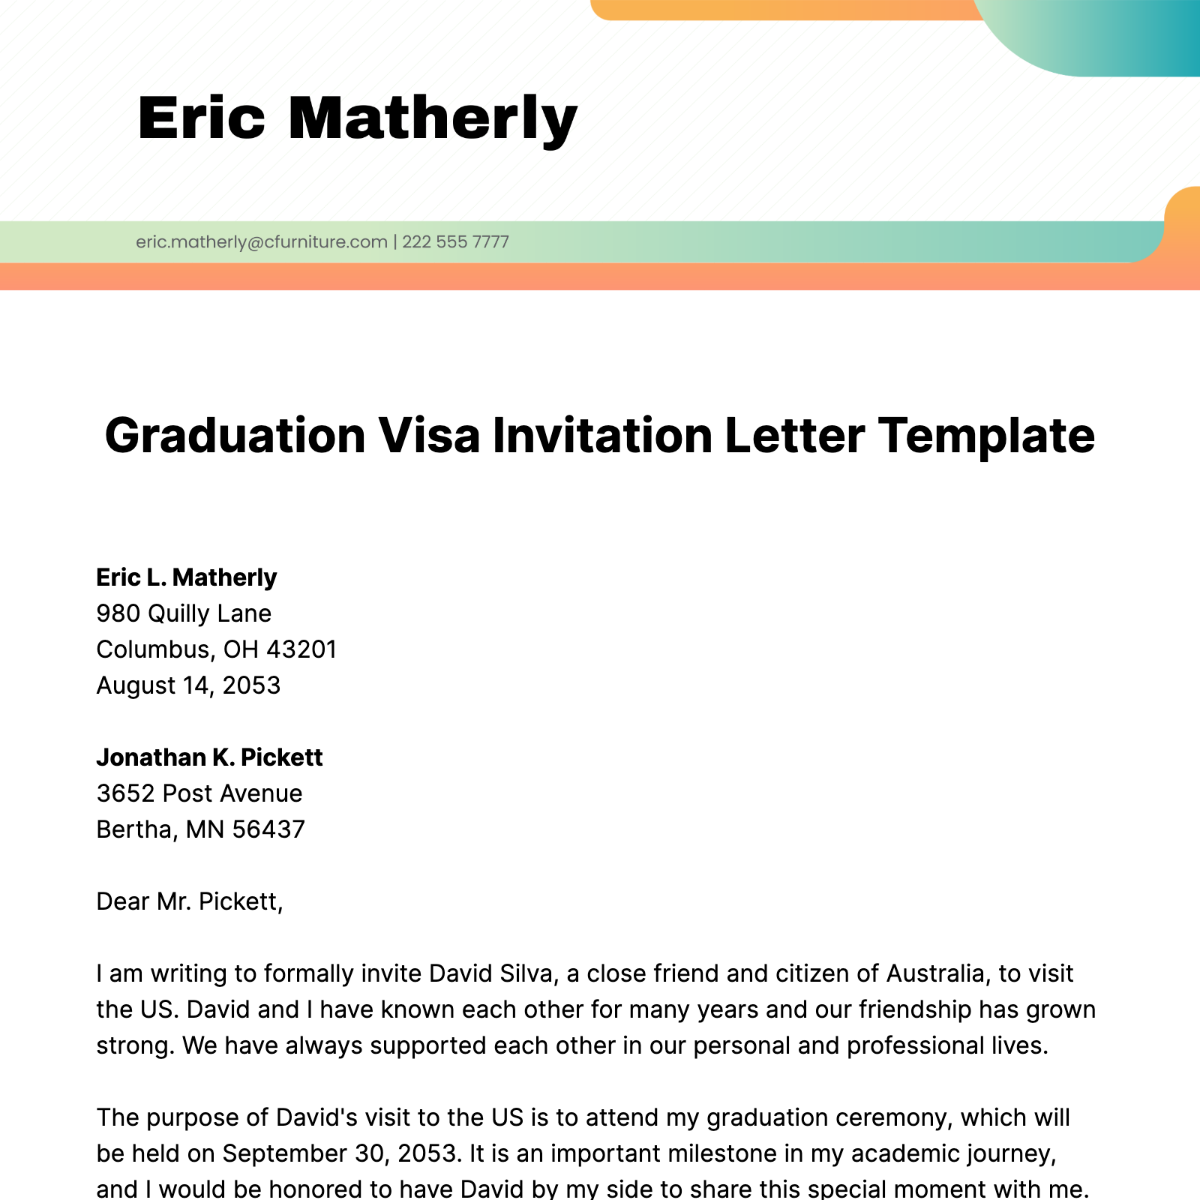 Graduation Visa Invitation Letter Template